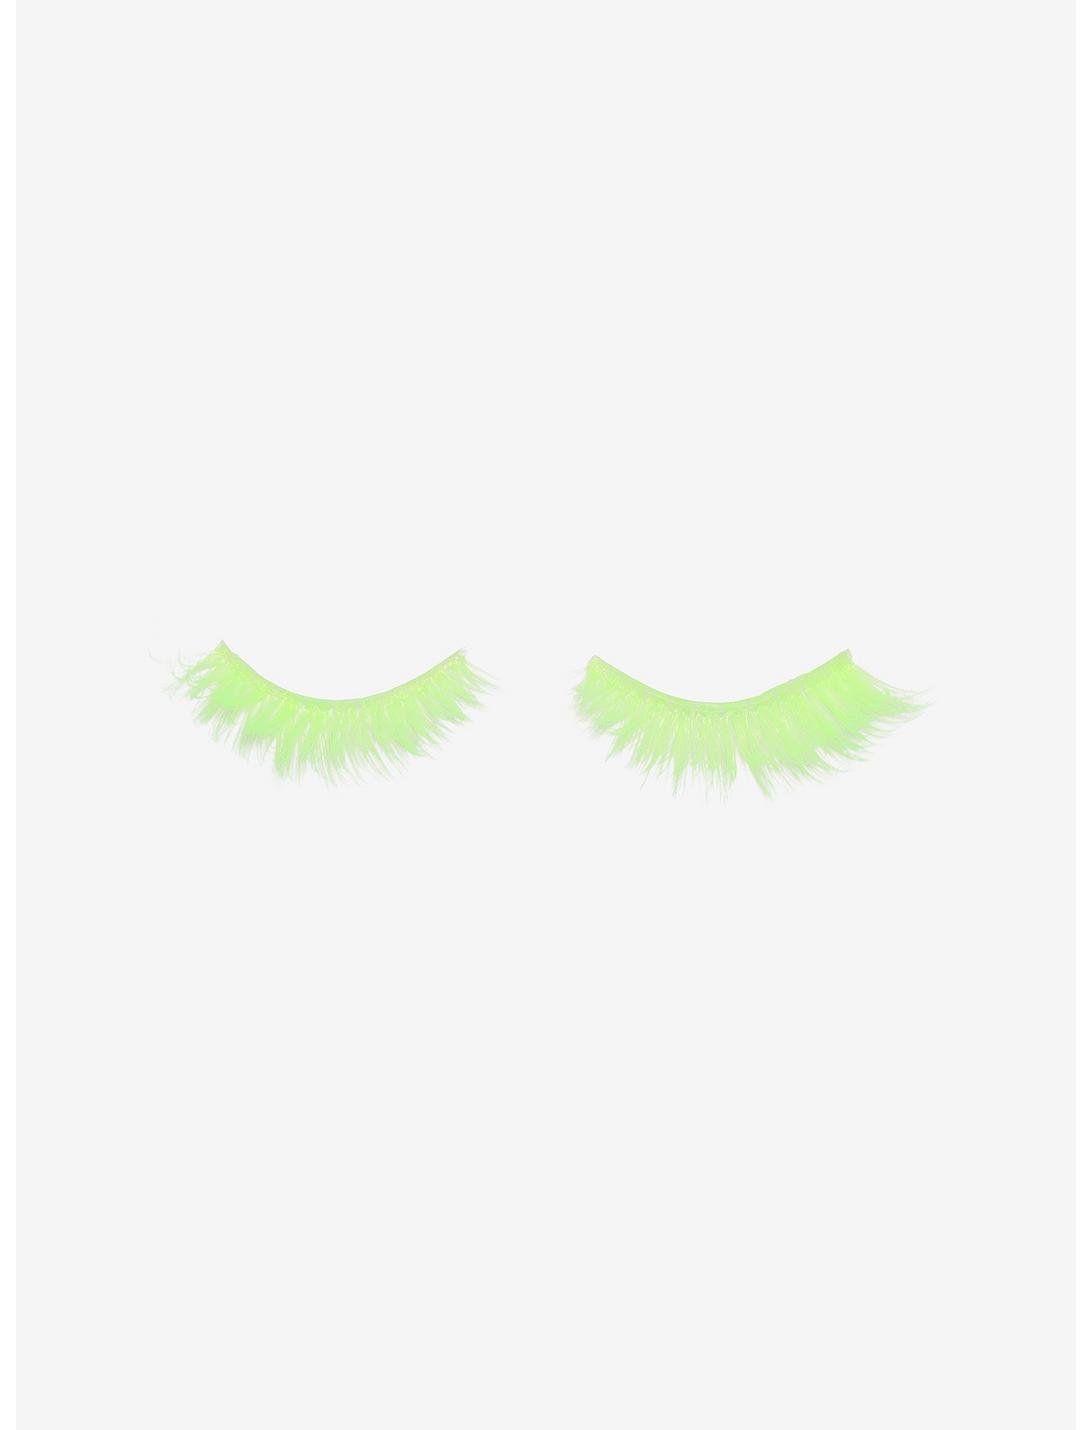 Kara Beauty Fabulashes Neon Green 3D Faux Mink Color Eyelashes, , hi-res